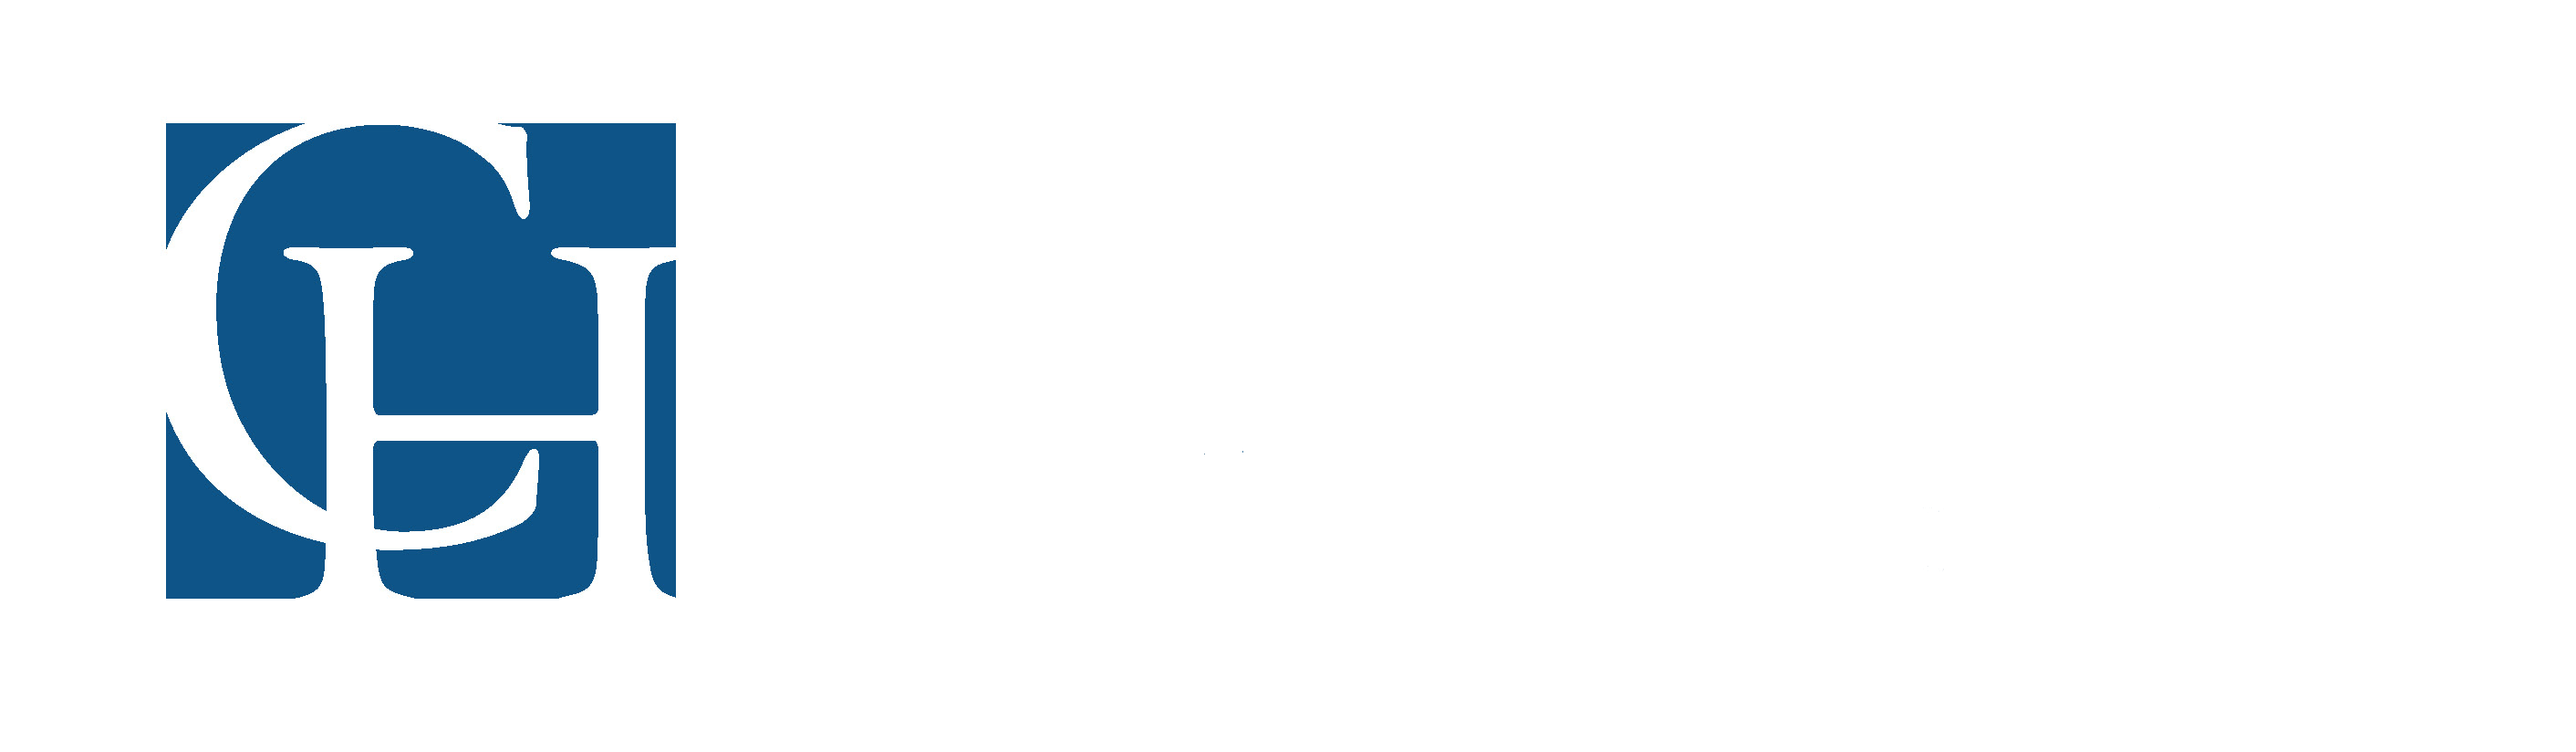 Culp-Henson Concierge Cardiology and Internal Medicine